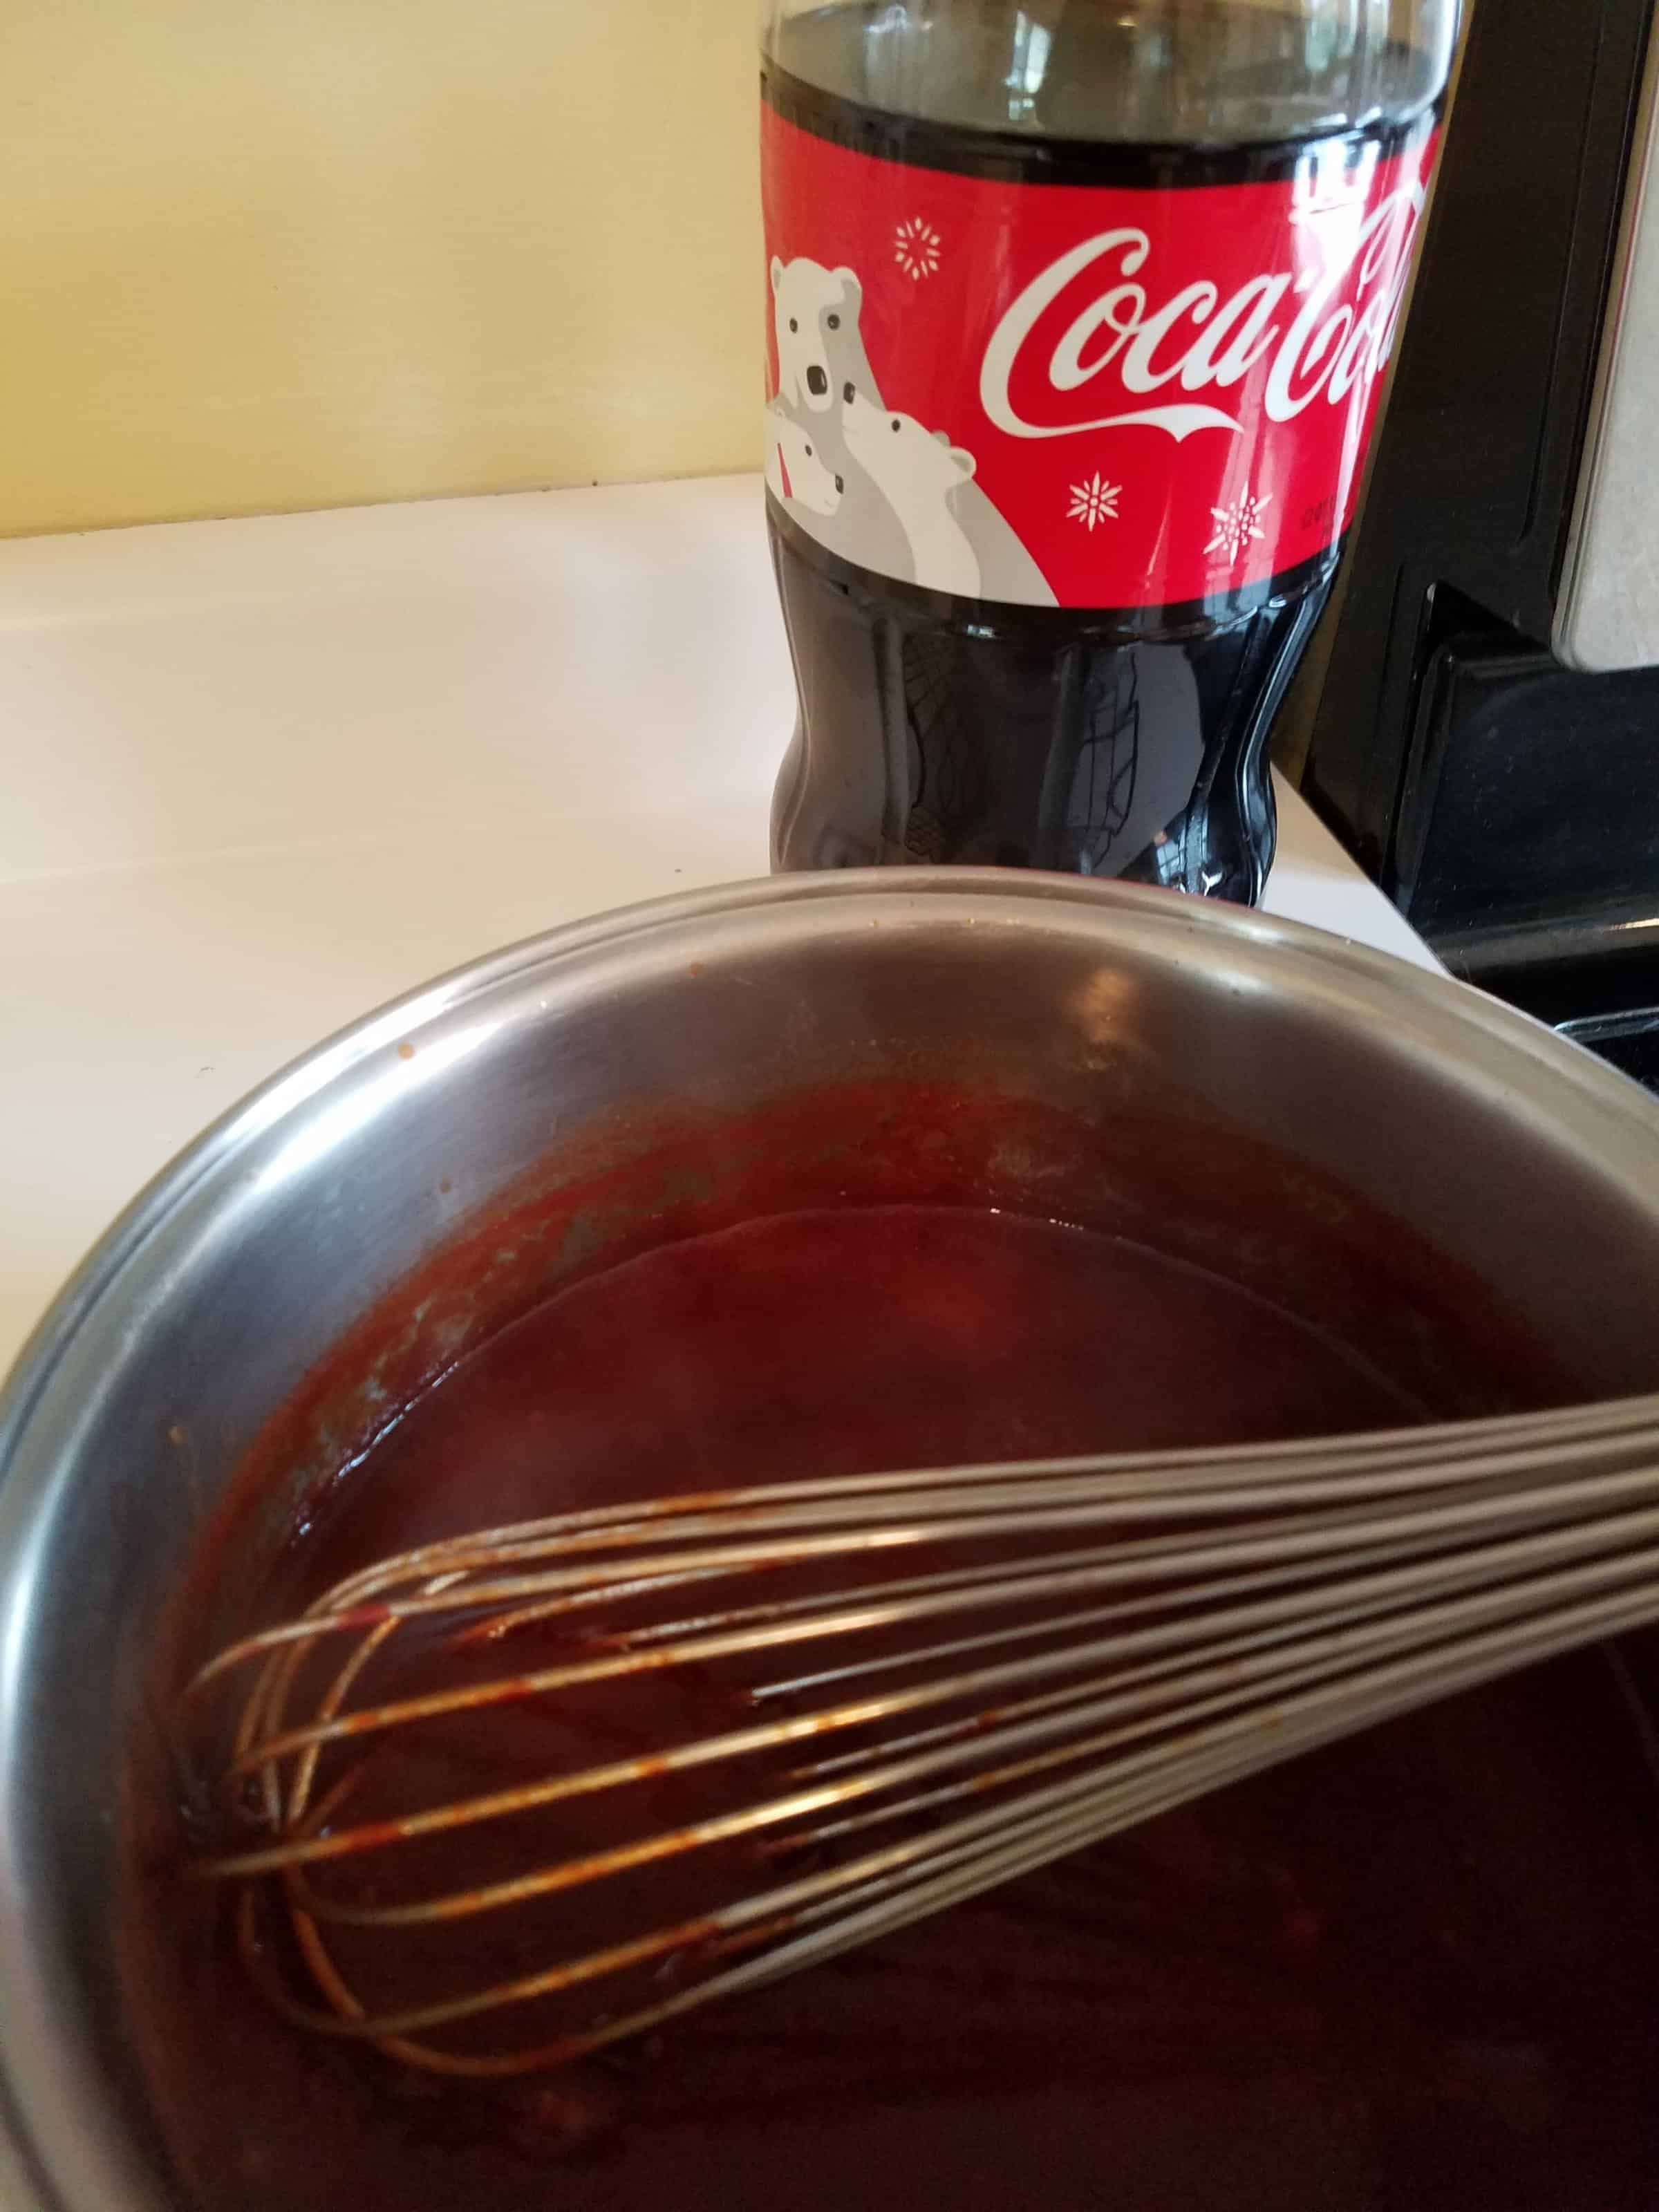 Coca Cola Sauce